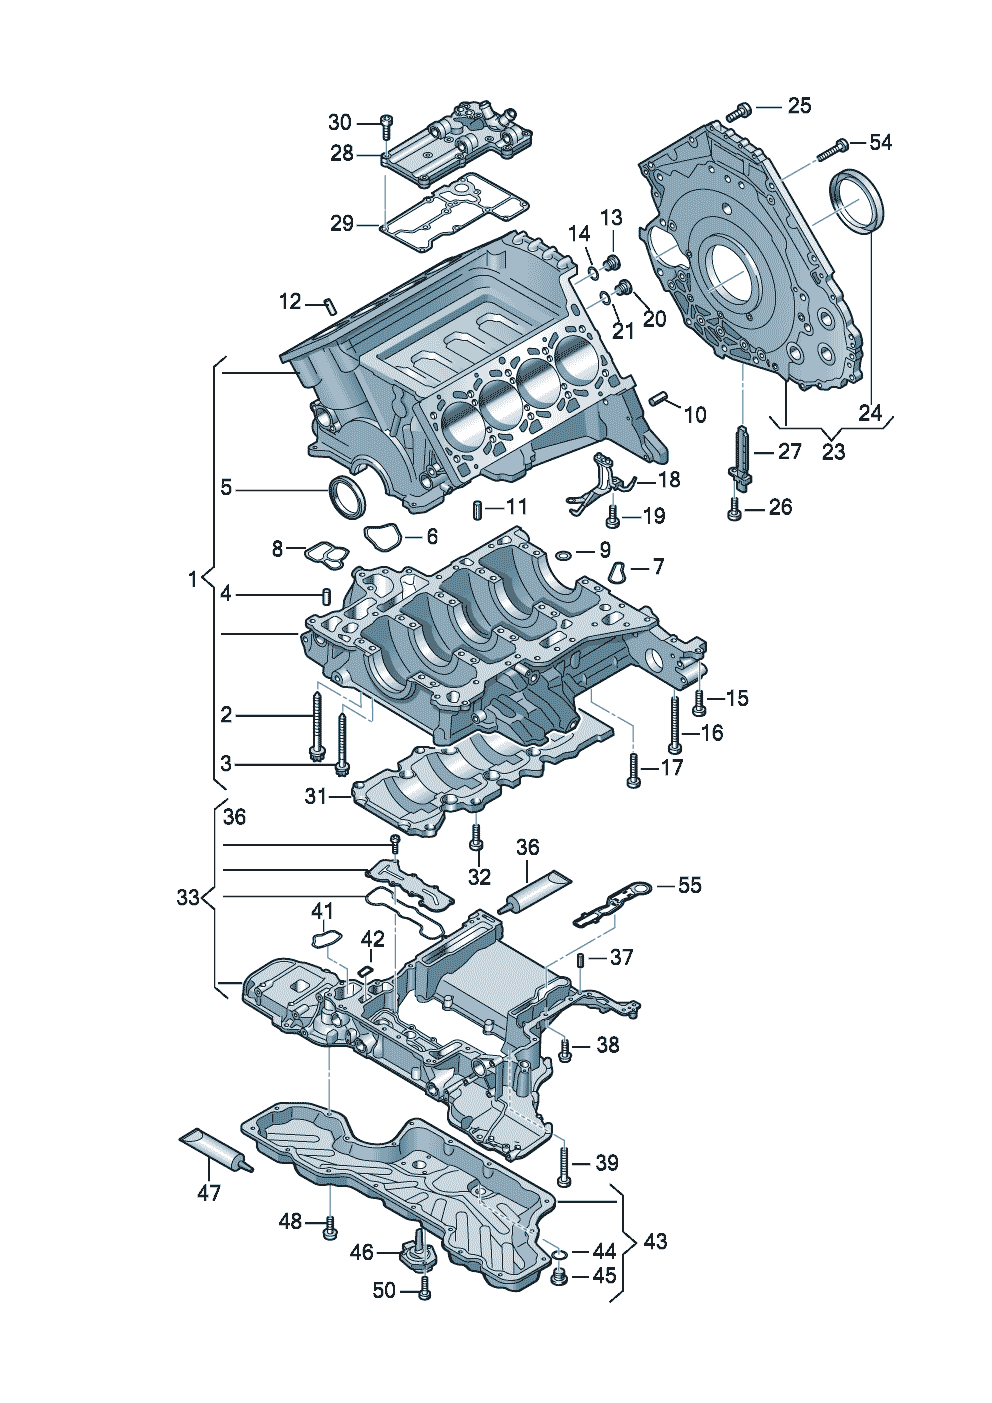 oil sumpSealing flangecylinder block 4.0 ltr.<br> 331KW - Audi A6/Avant - a6